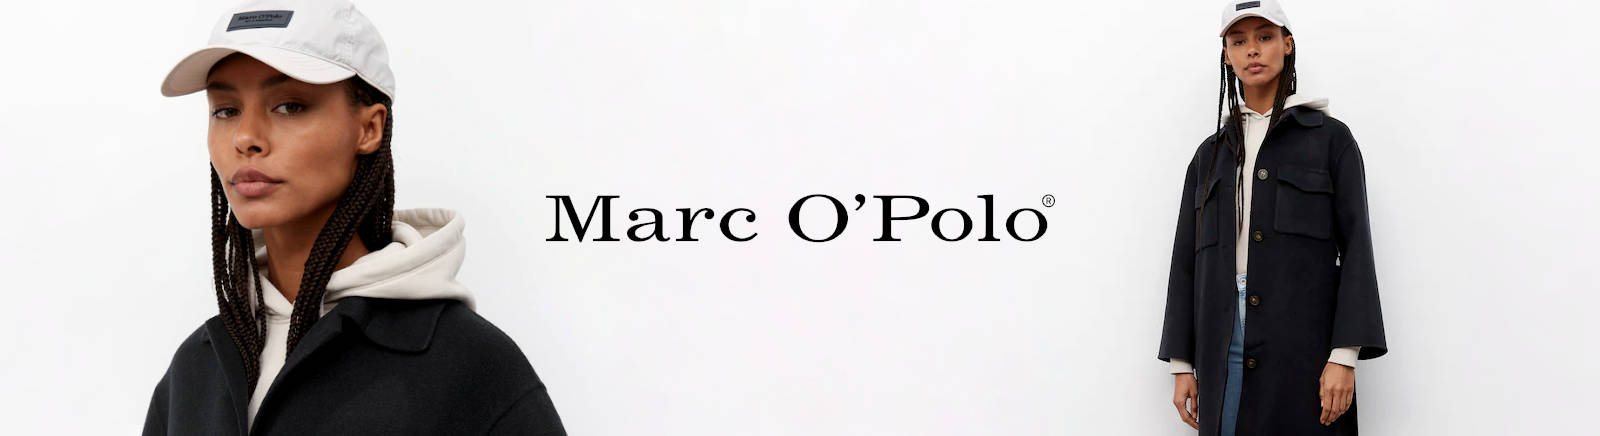 Juppen: Marc O'Polo Espadrilles für Damen kaufen online shoppen